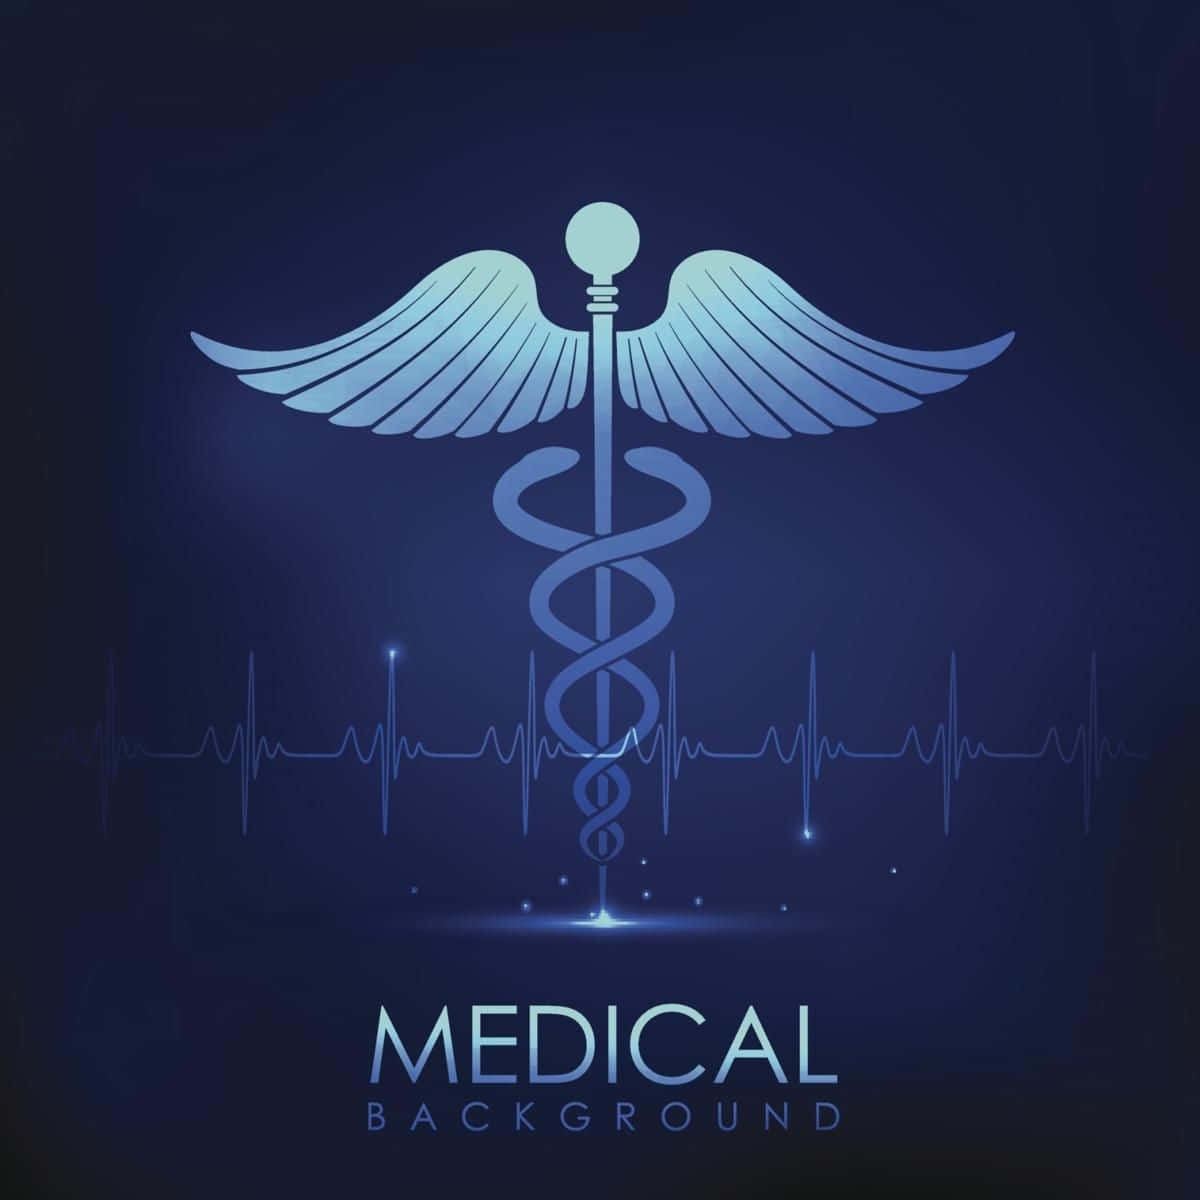 Medical Background With A Caduceus Symbol